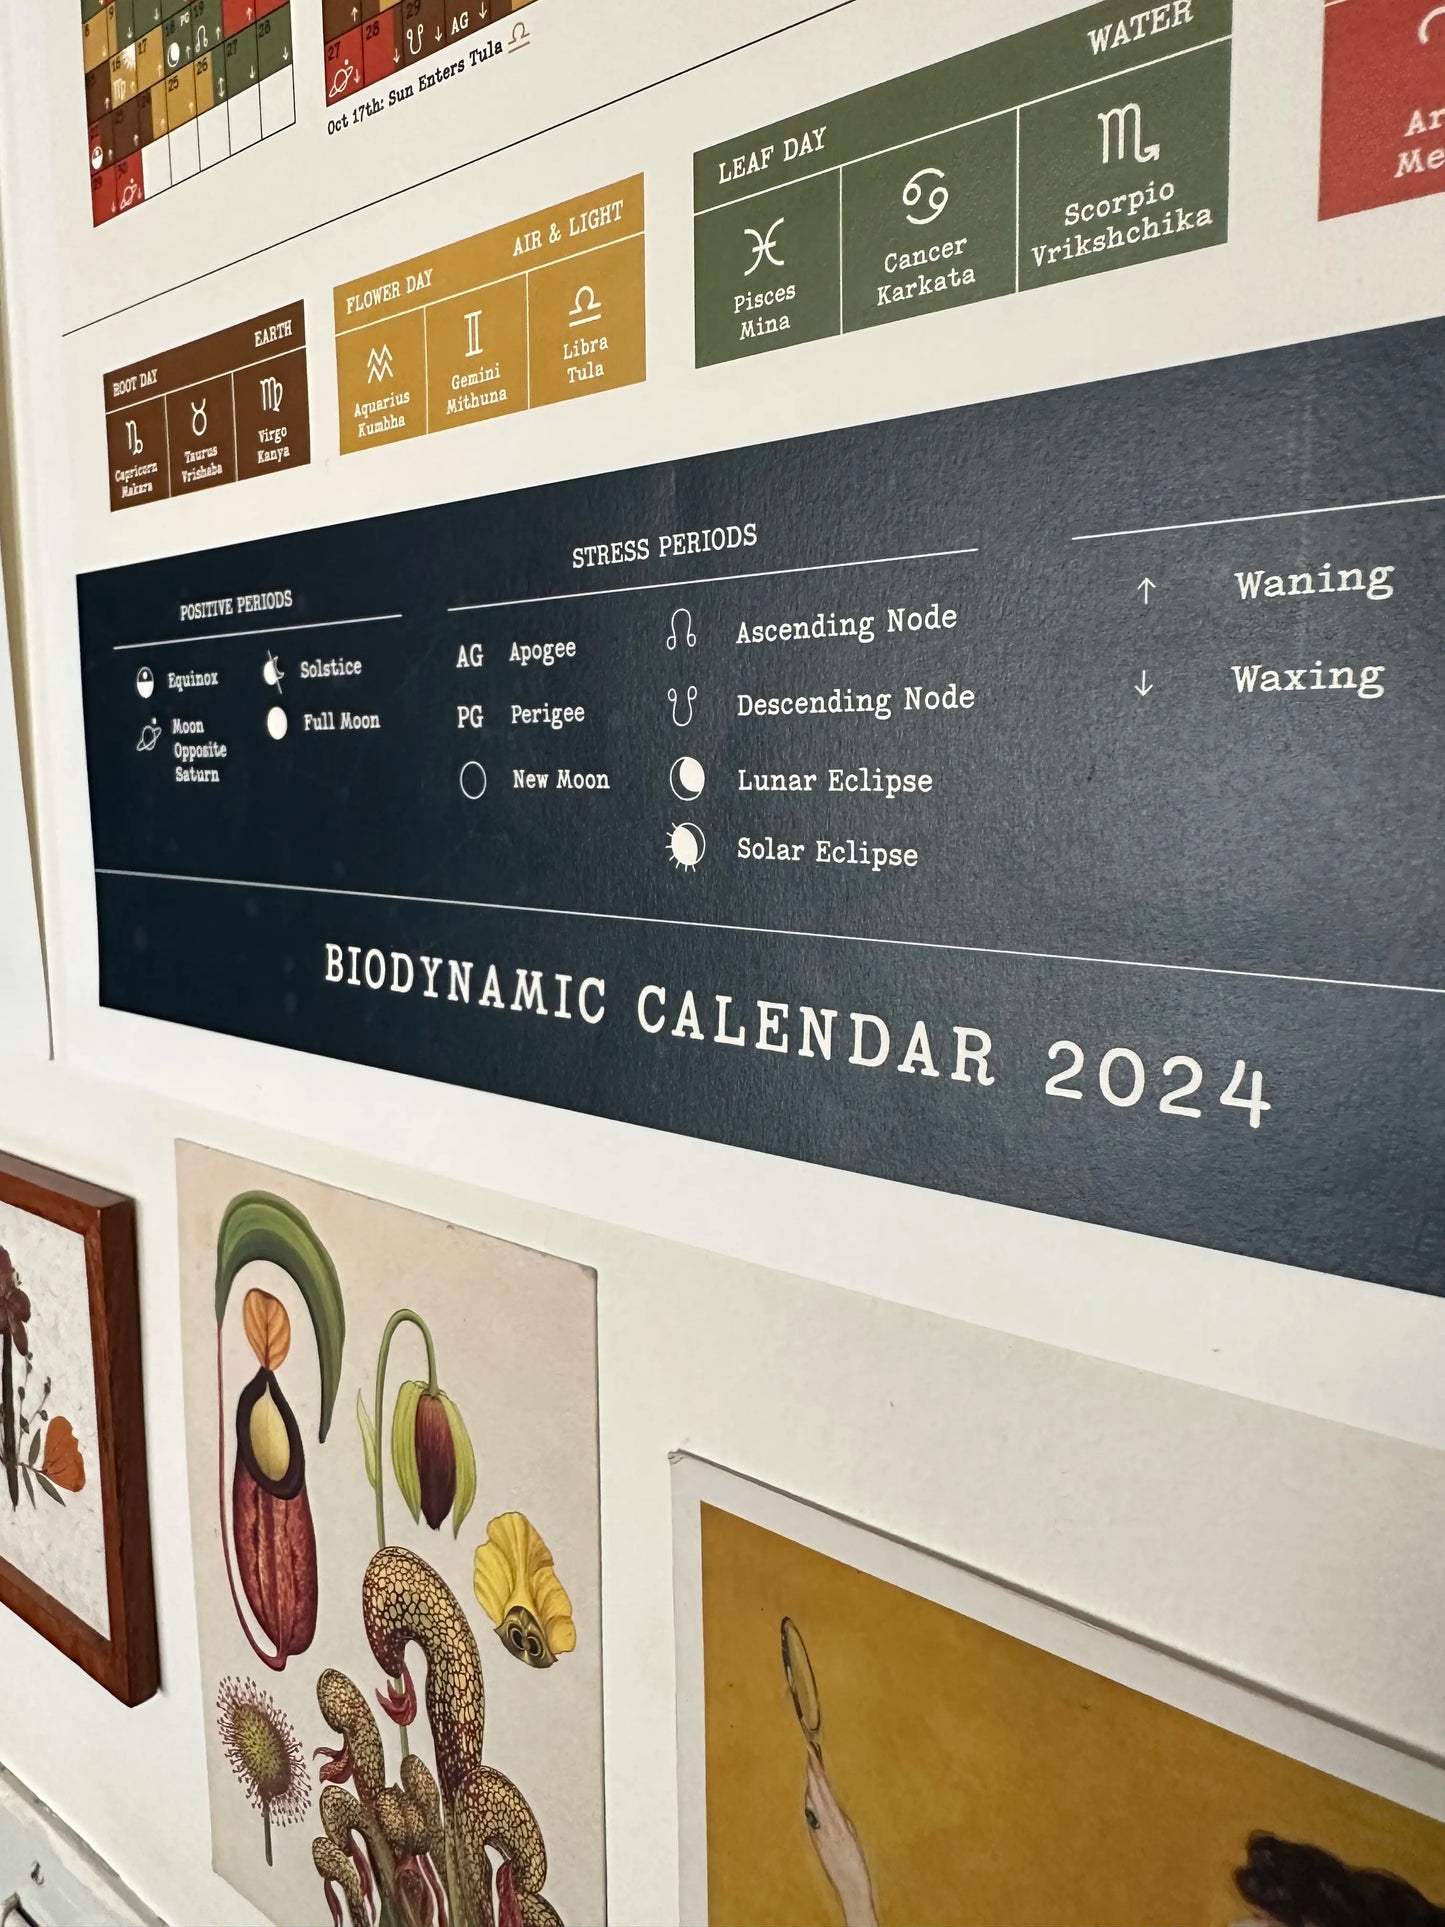 Biodynamic Calendar 2024 - Simplified